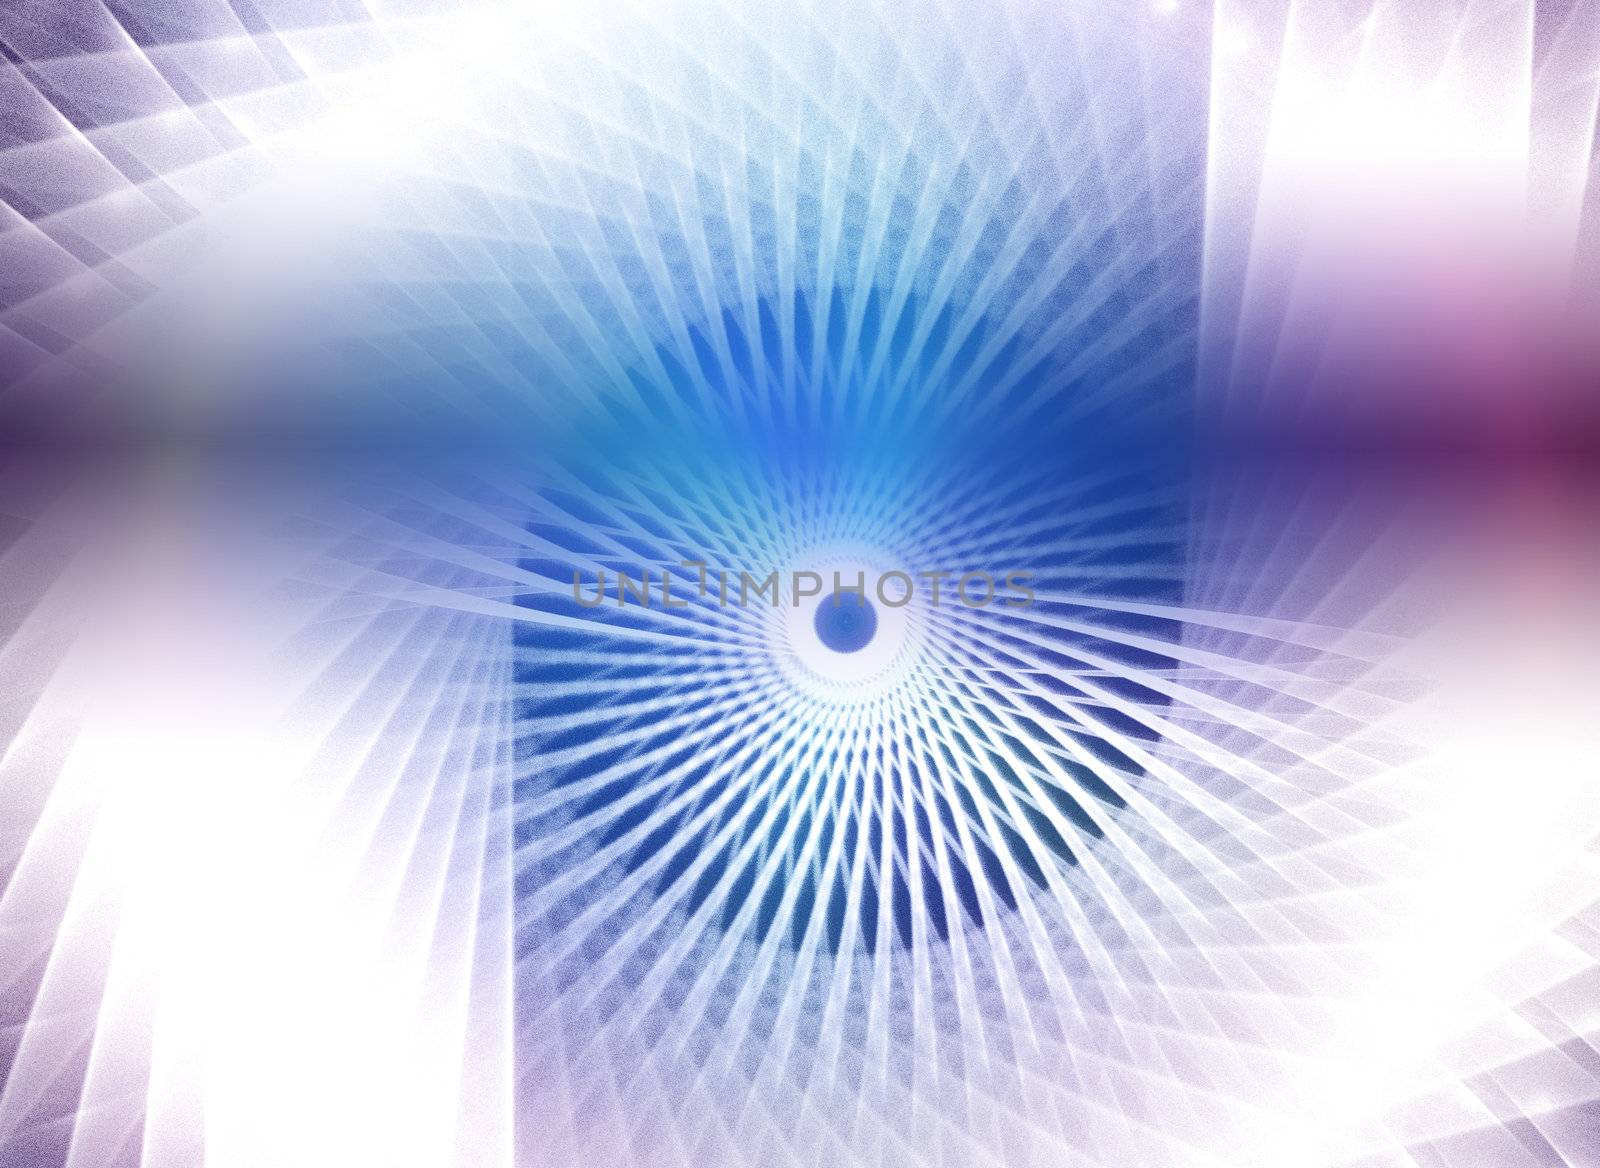 Technological design abstract blue background, fiber optics.
Sug by FernandoCortes